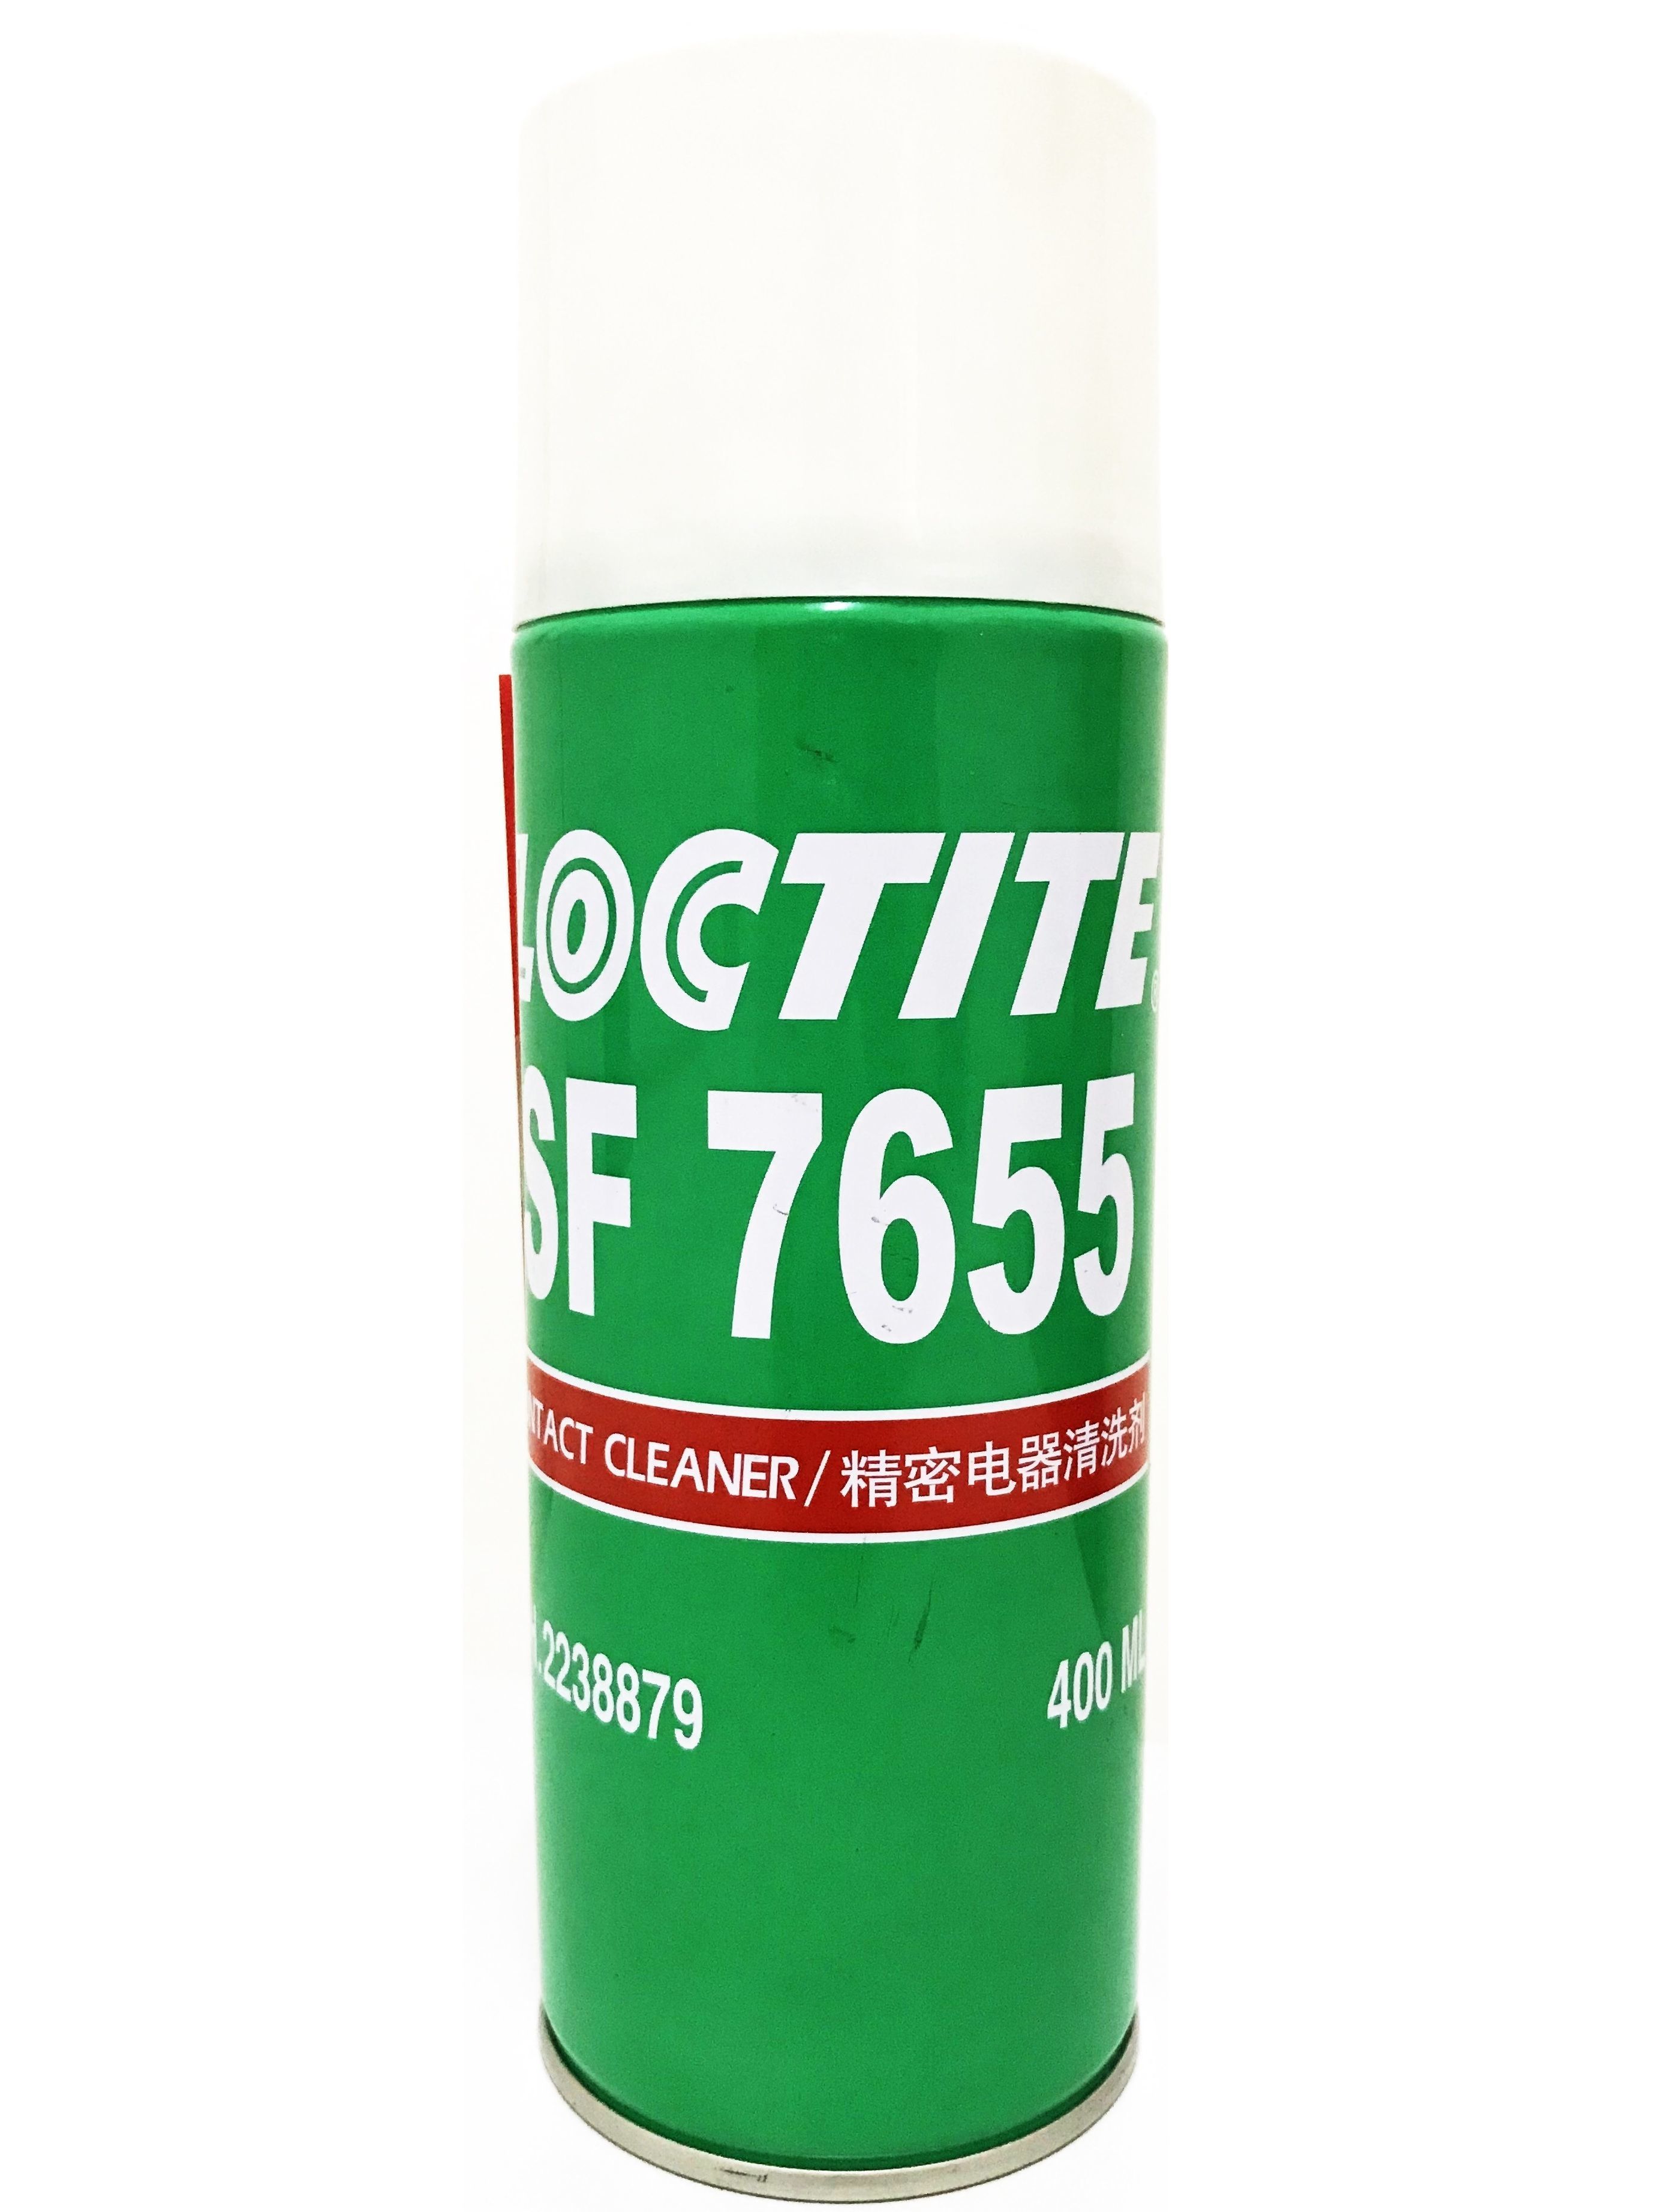 SF 7655 (CONTACT CLEANER) น้ำยาทำความสะอาดหน้าสัมผัส IDH2238879